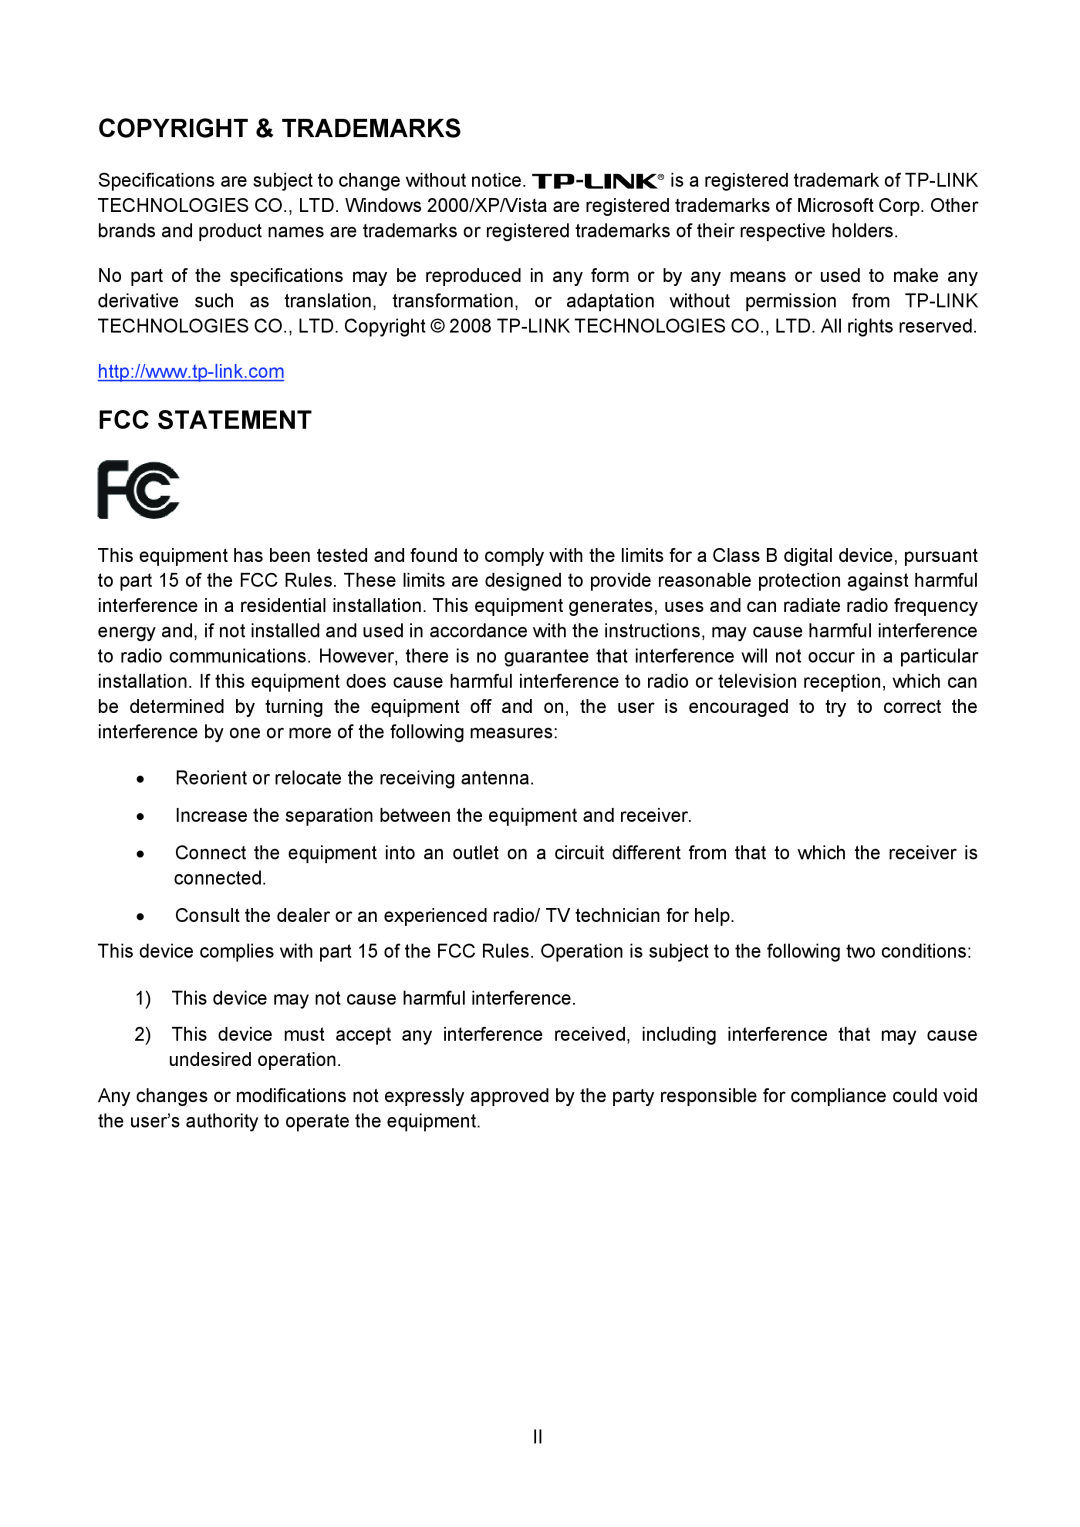 TP-Link TL-PS310U manual Copyright & Trademarks, Fcc Statement 